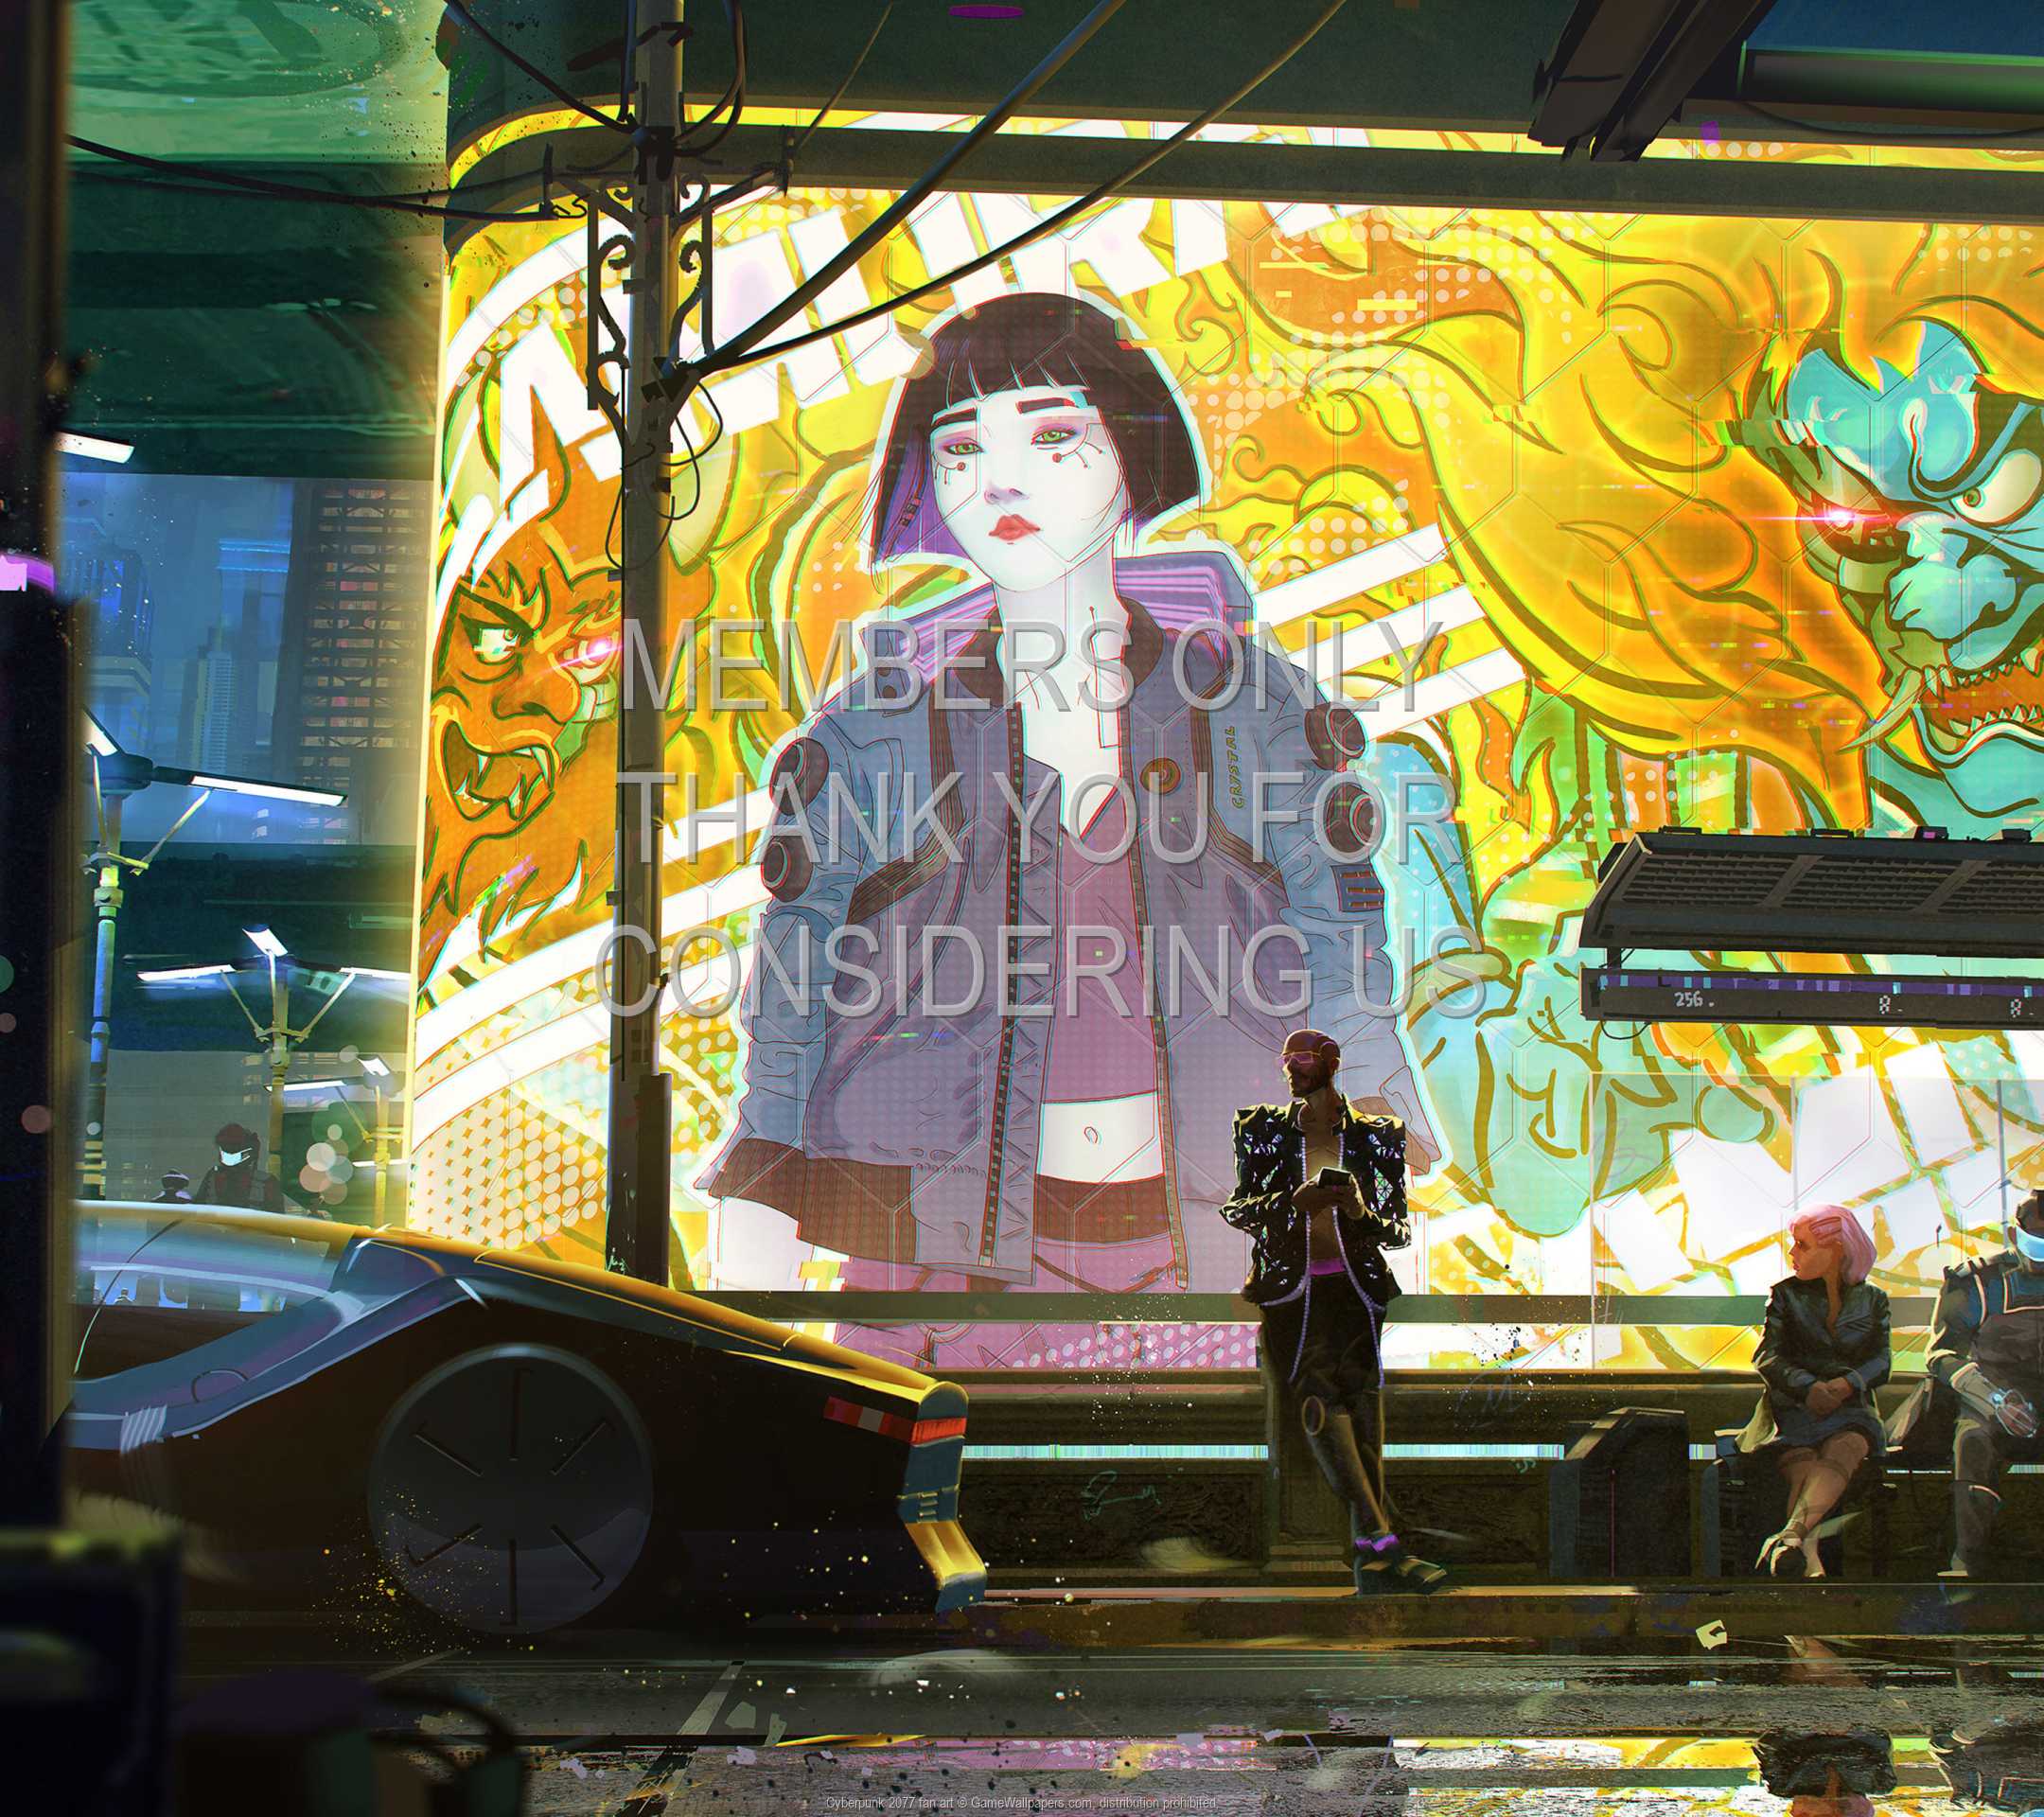 Cyberpunk 2077 fan art 1080p Horizontal Mobile wallpaper or background 05